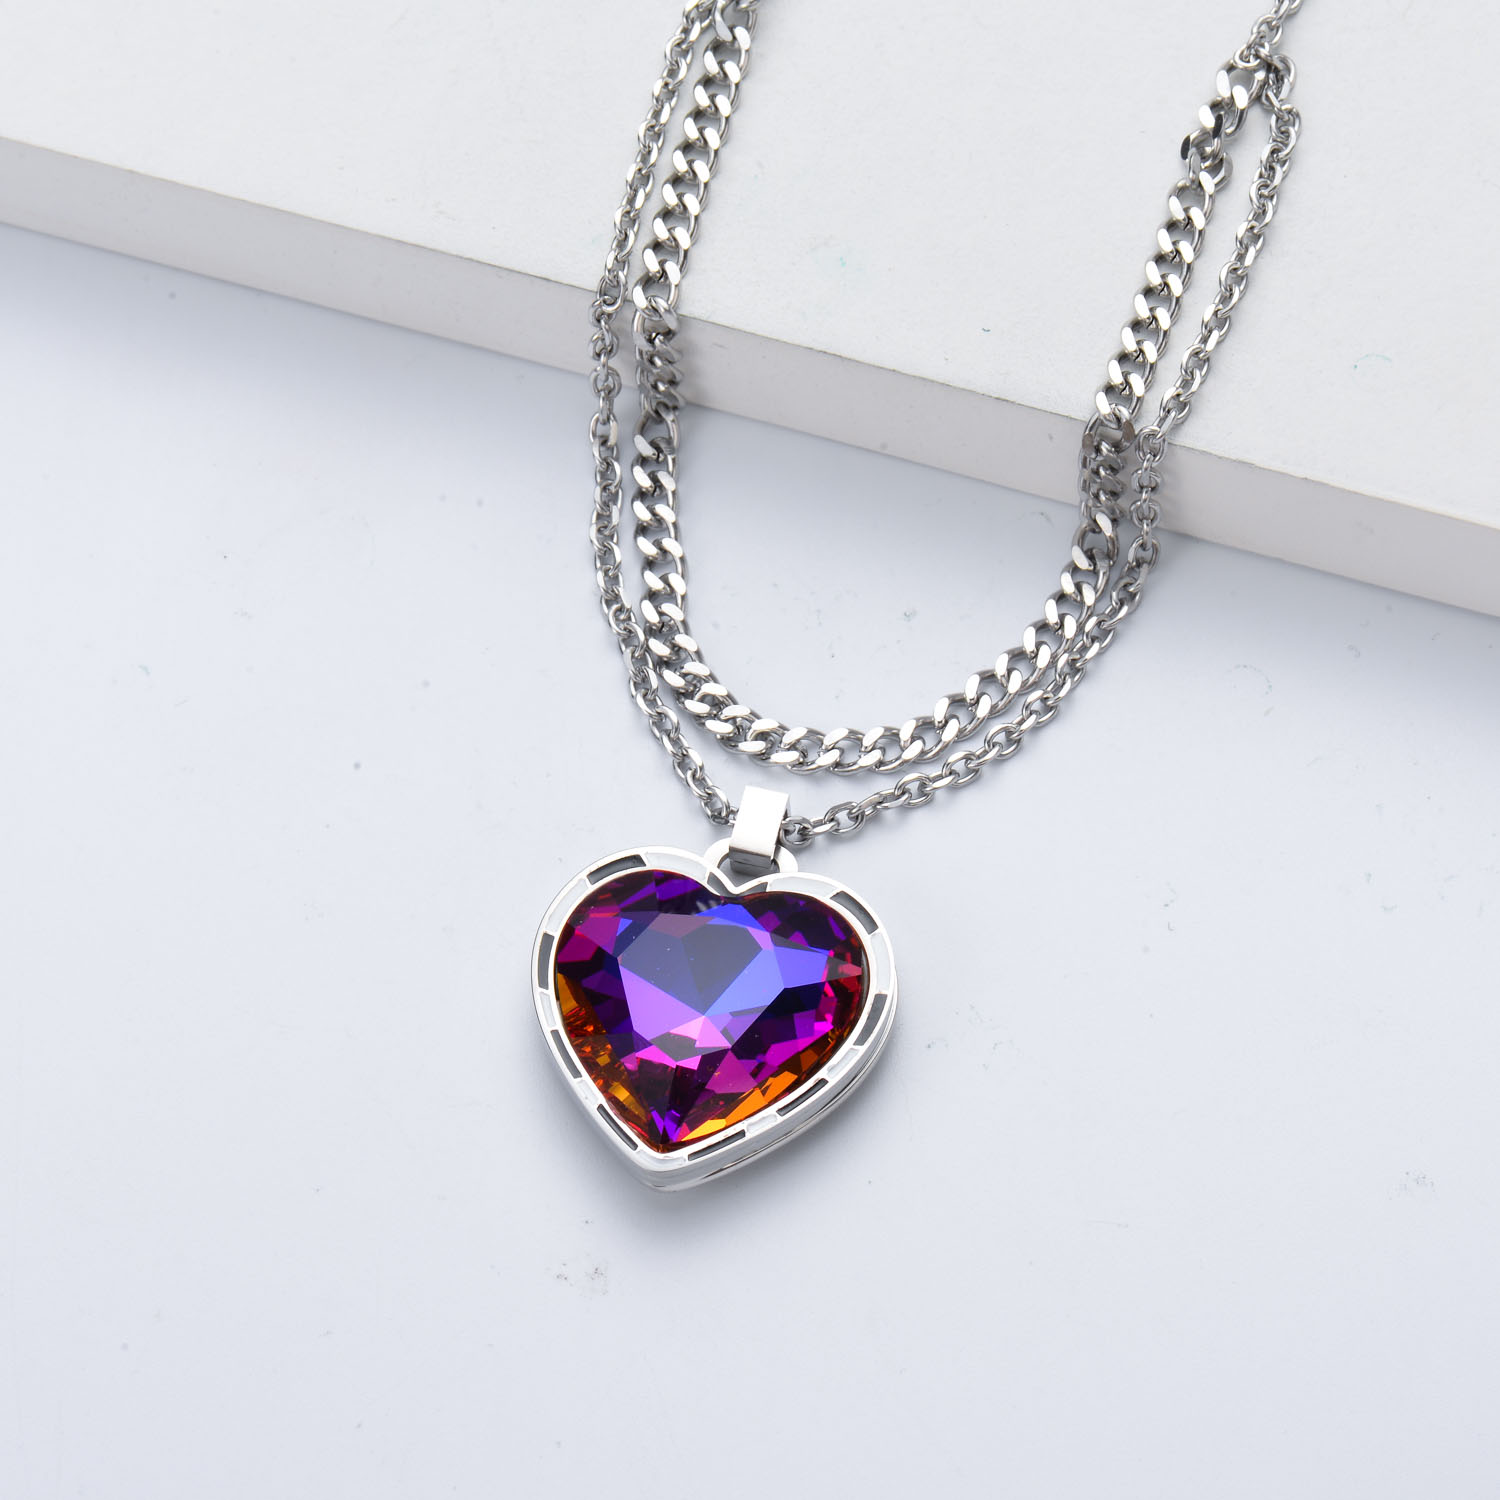 collares de moda plateado con colgante corazon cristal violeta por mayoreo